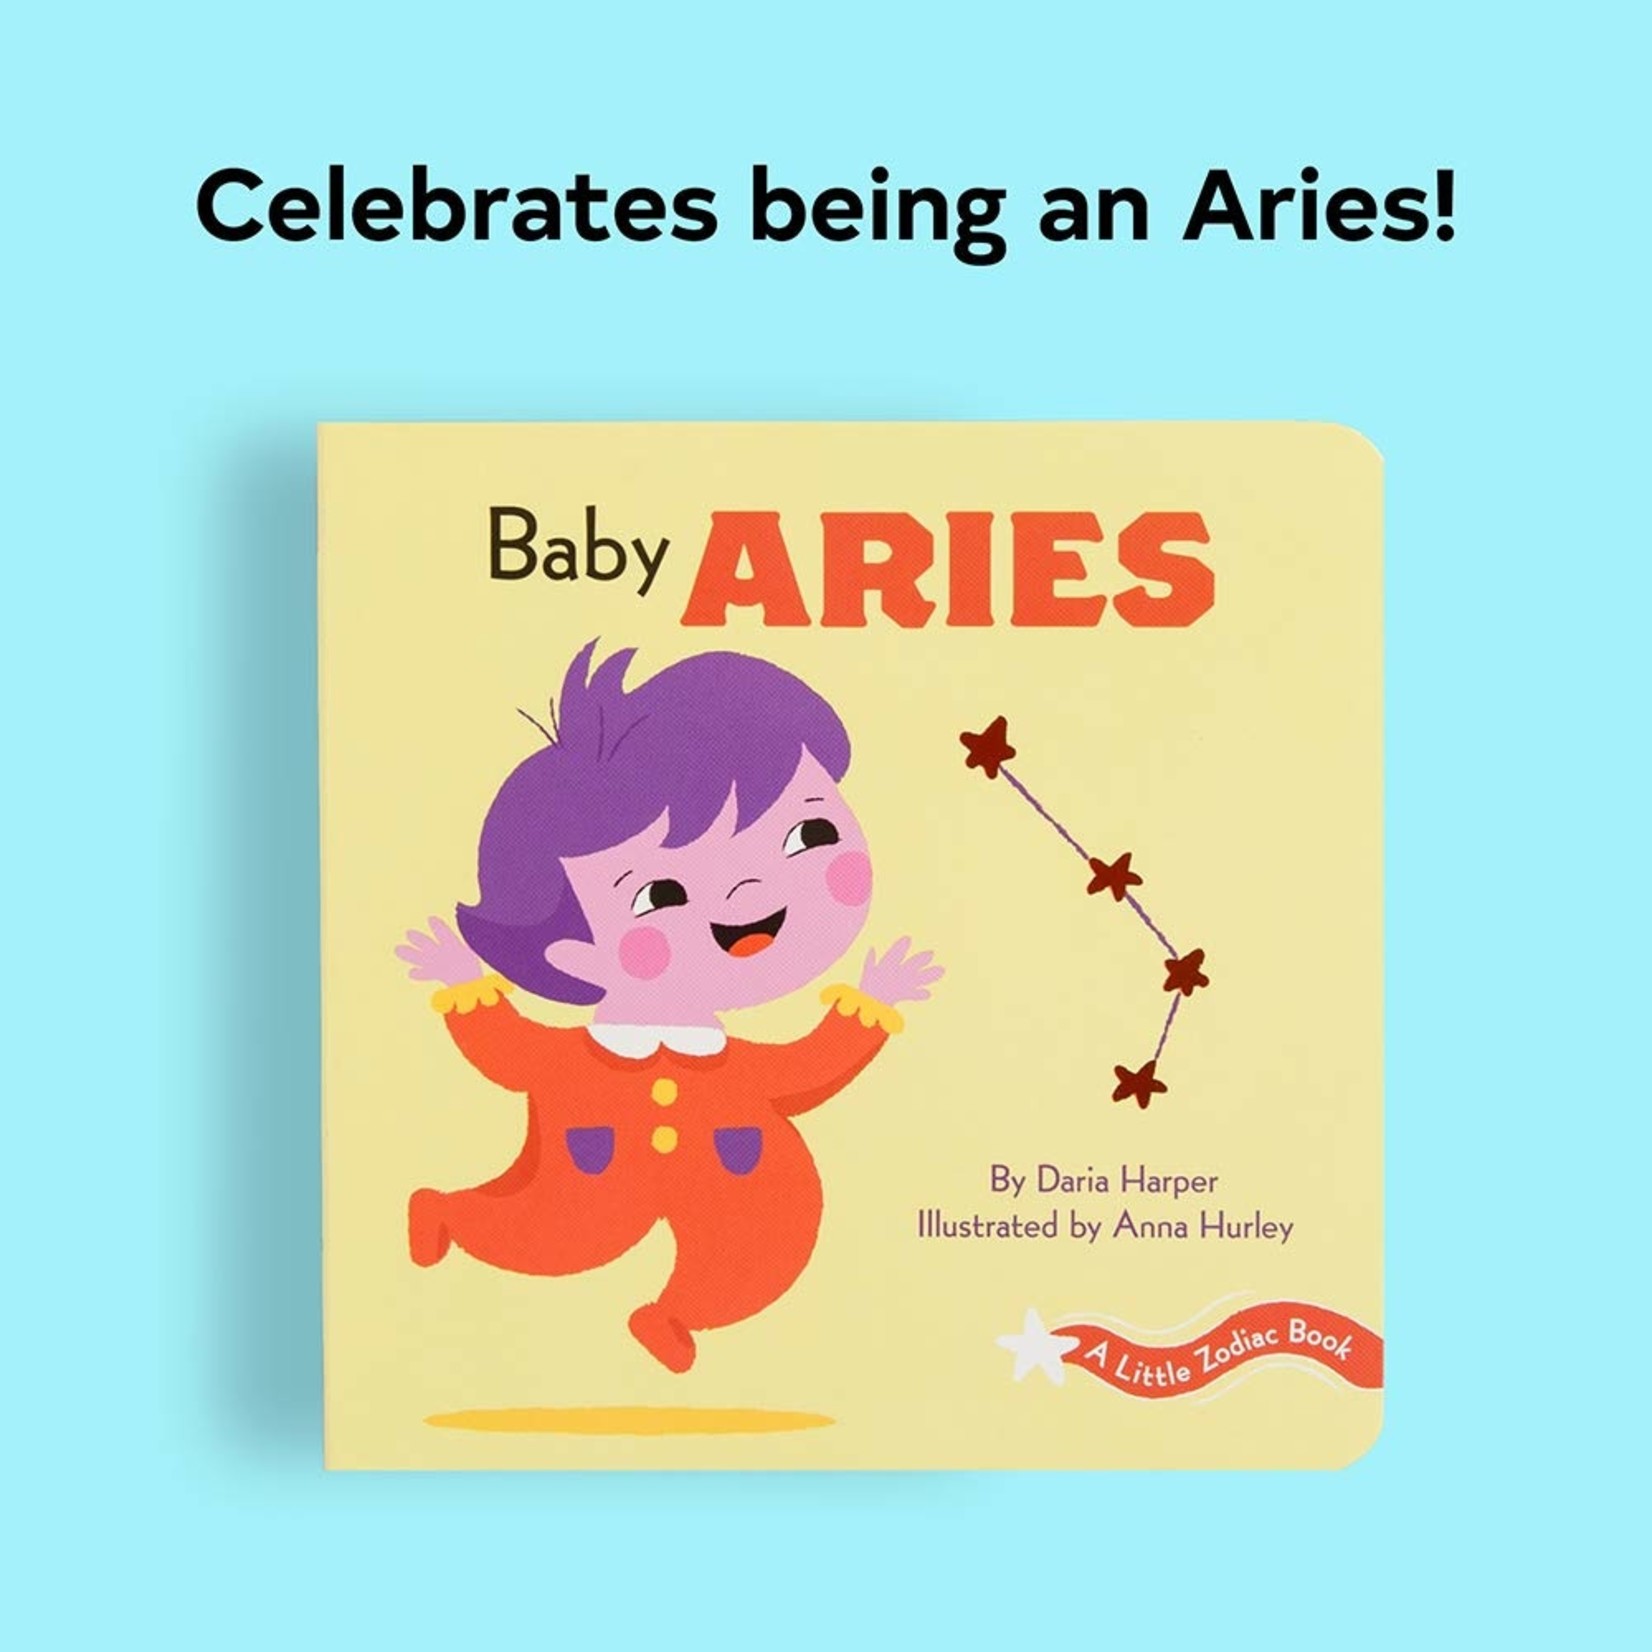 CHRONICLE LITTLE ZODIAC BOOK: BABY ARIES